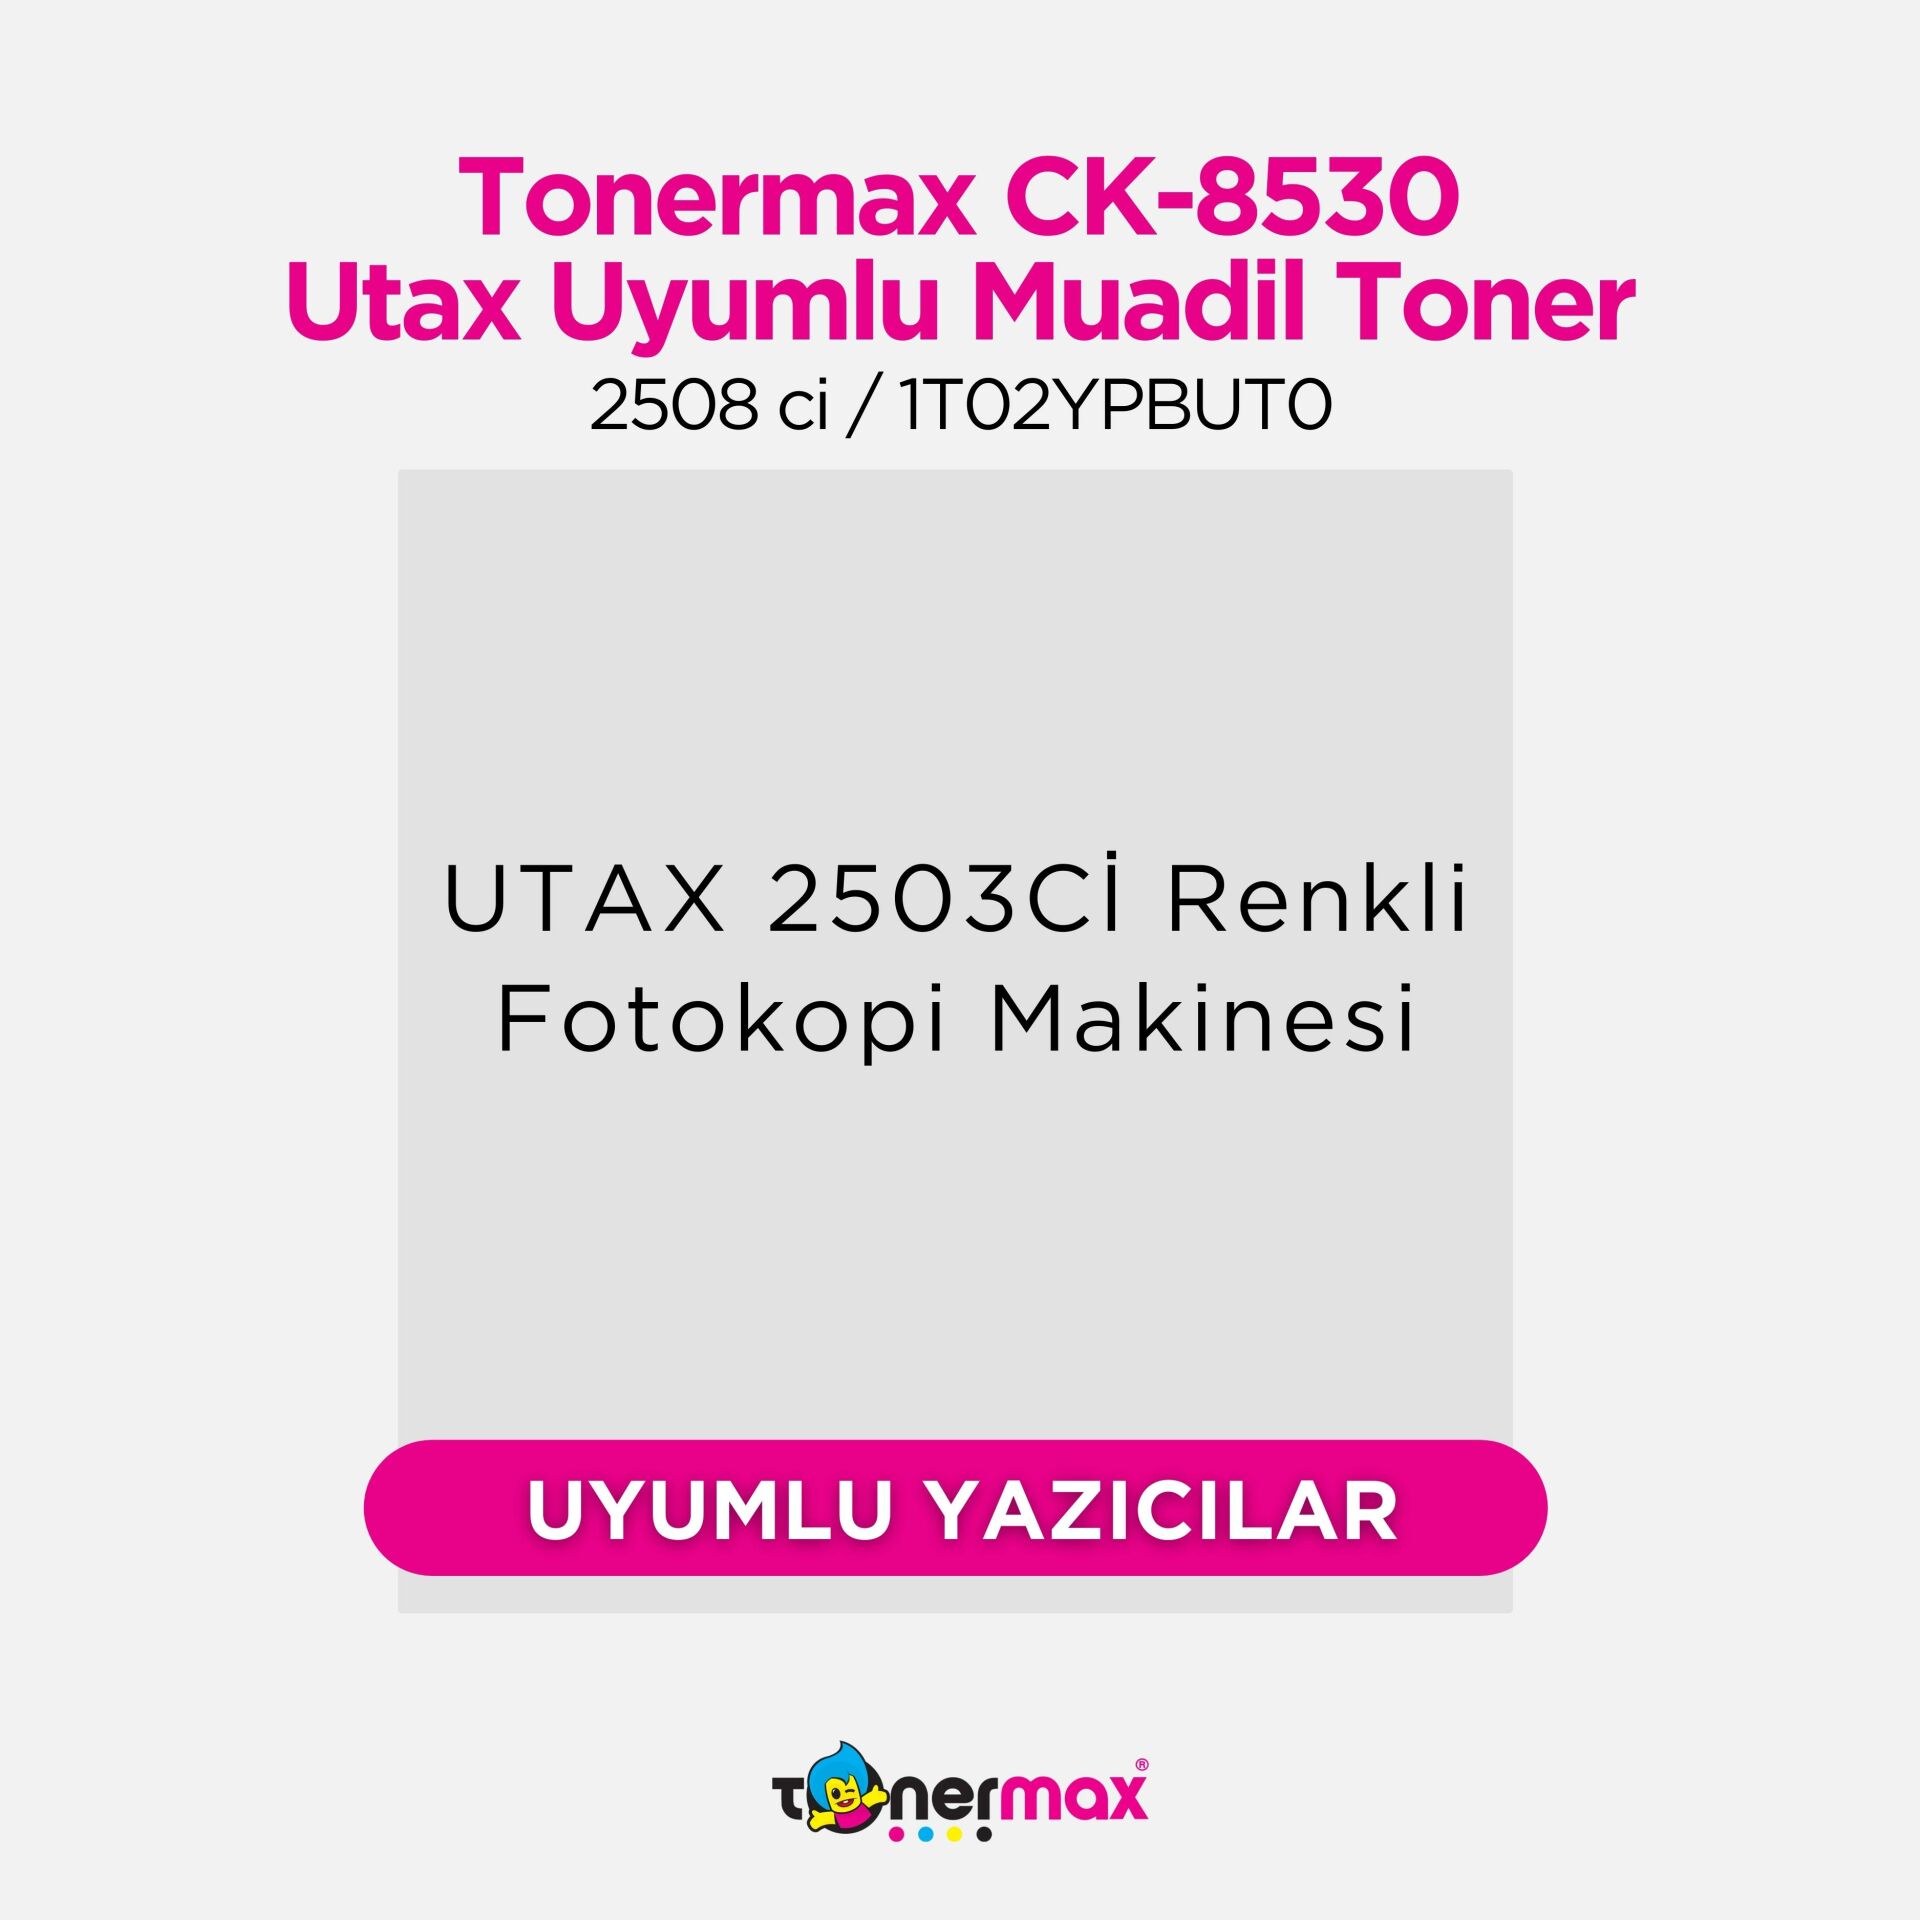 Utax CK-8530 Muadil Toner Sarı / 2508 ci / 1T02YPAUT0